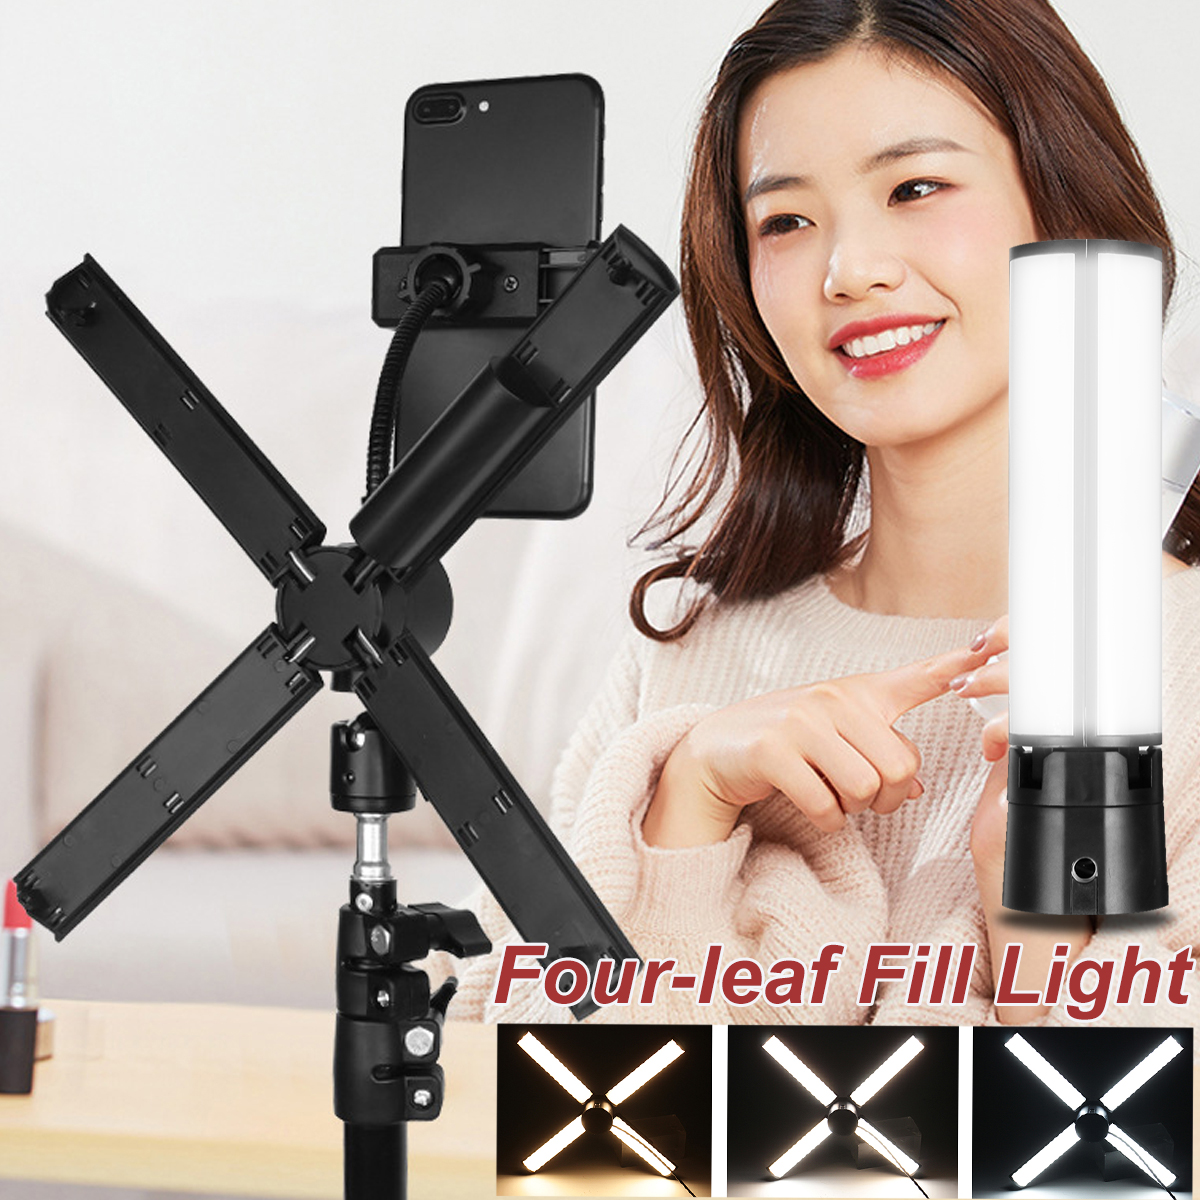 LED-Foldable-Fill-Light-Photography-Lighting-Selfie-Handheld-LED-Four-leaf-Lamp-with-3-Lighting-Mode-1944164-1